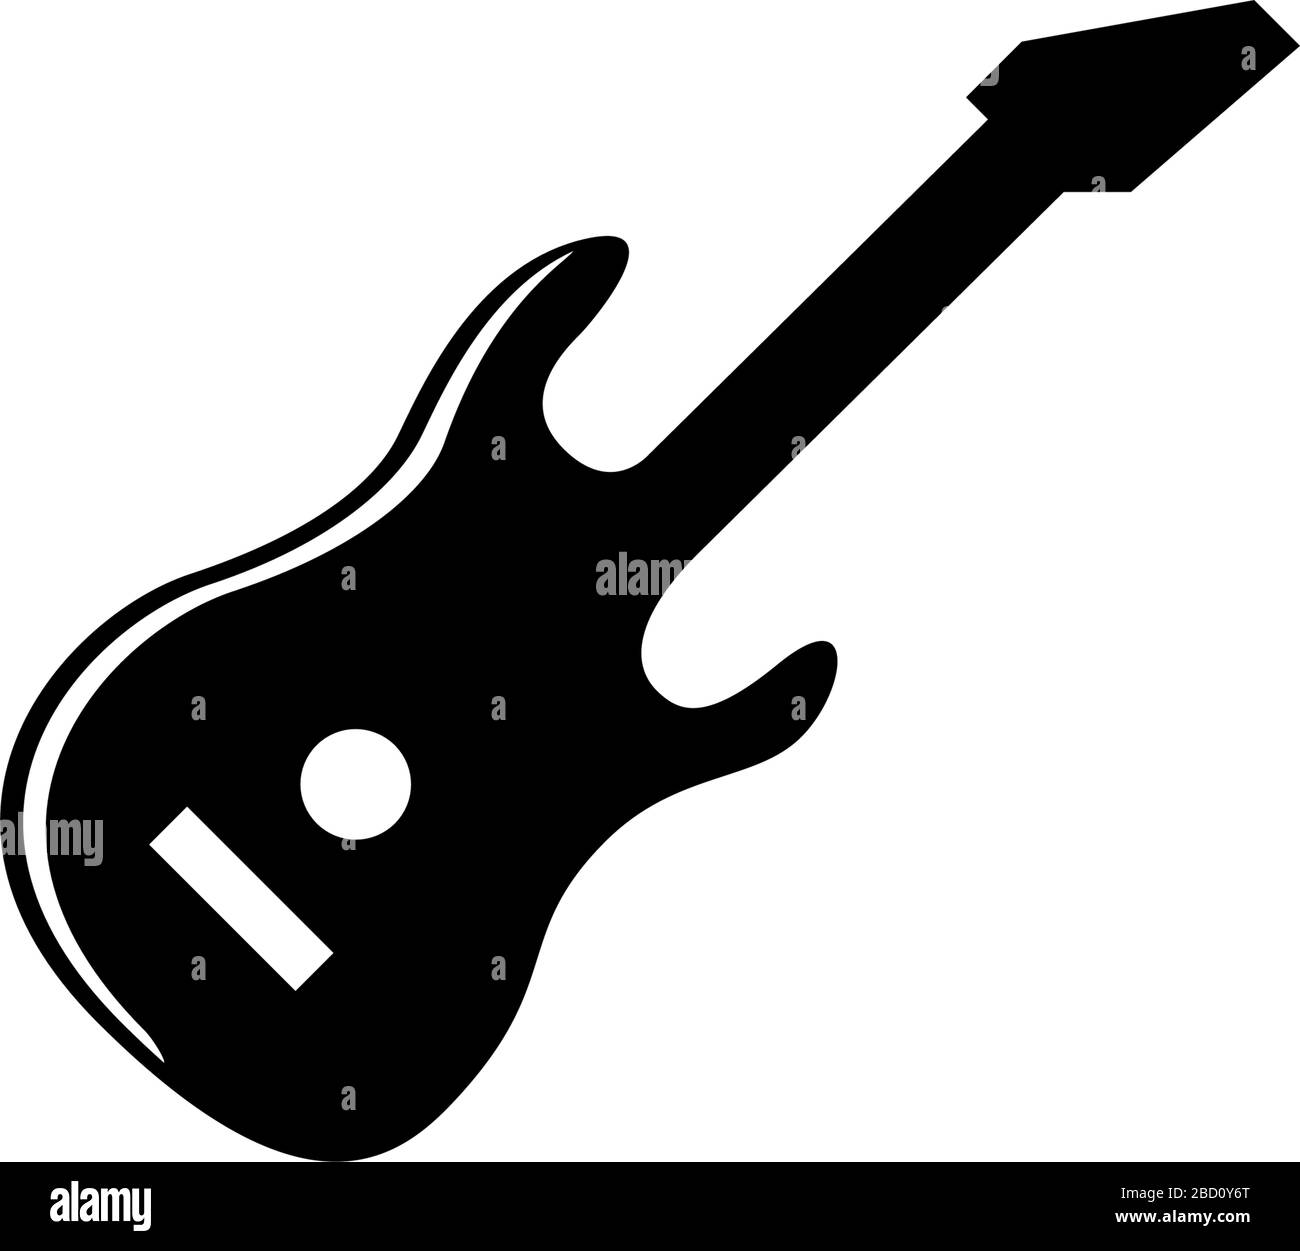 Bass Guitar Black Line Outline Stock Vector - Illustration of music,  background: 281529641